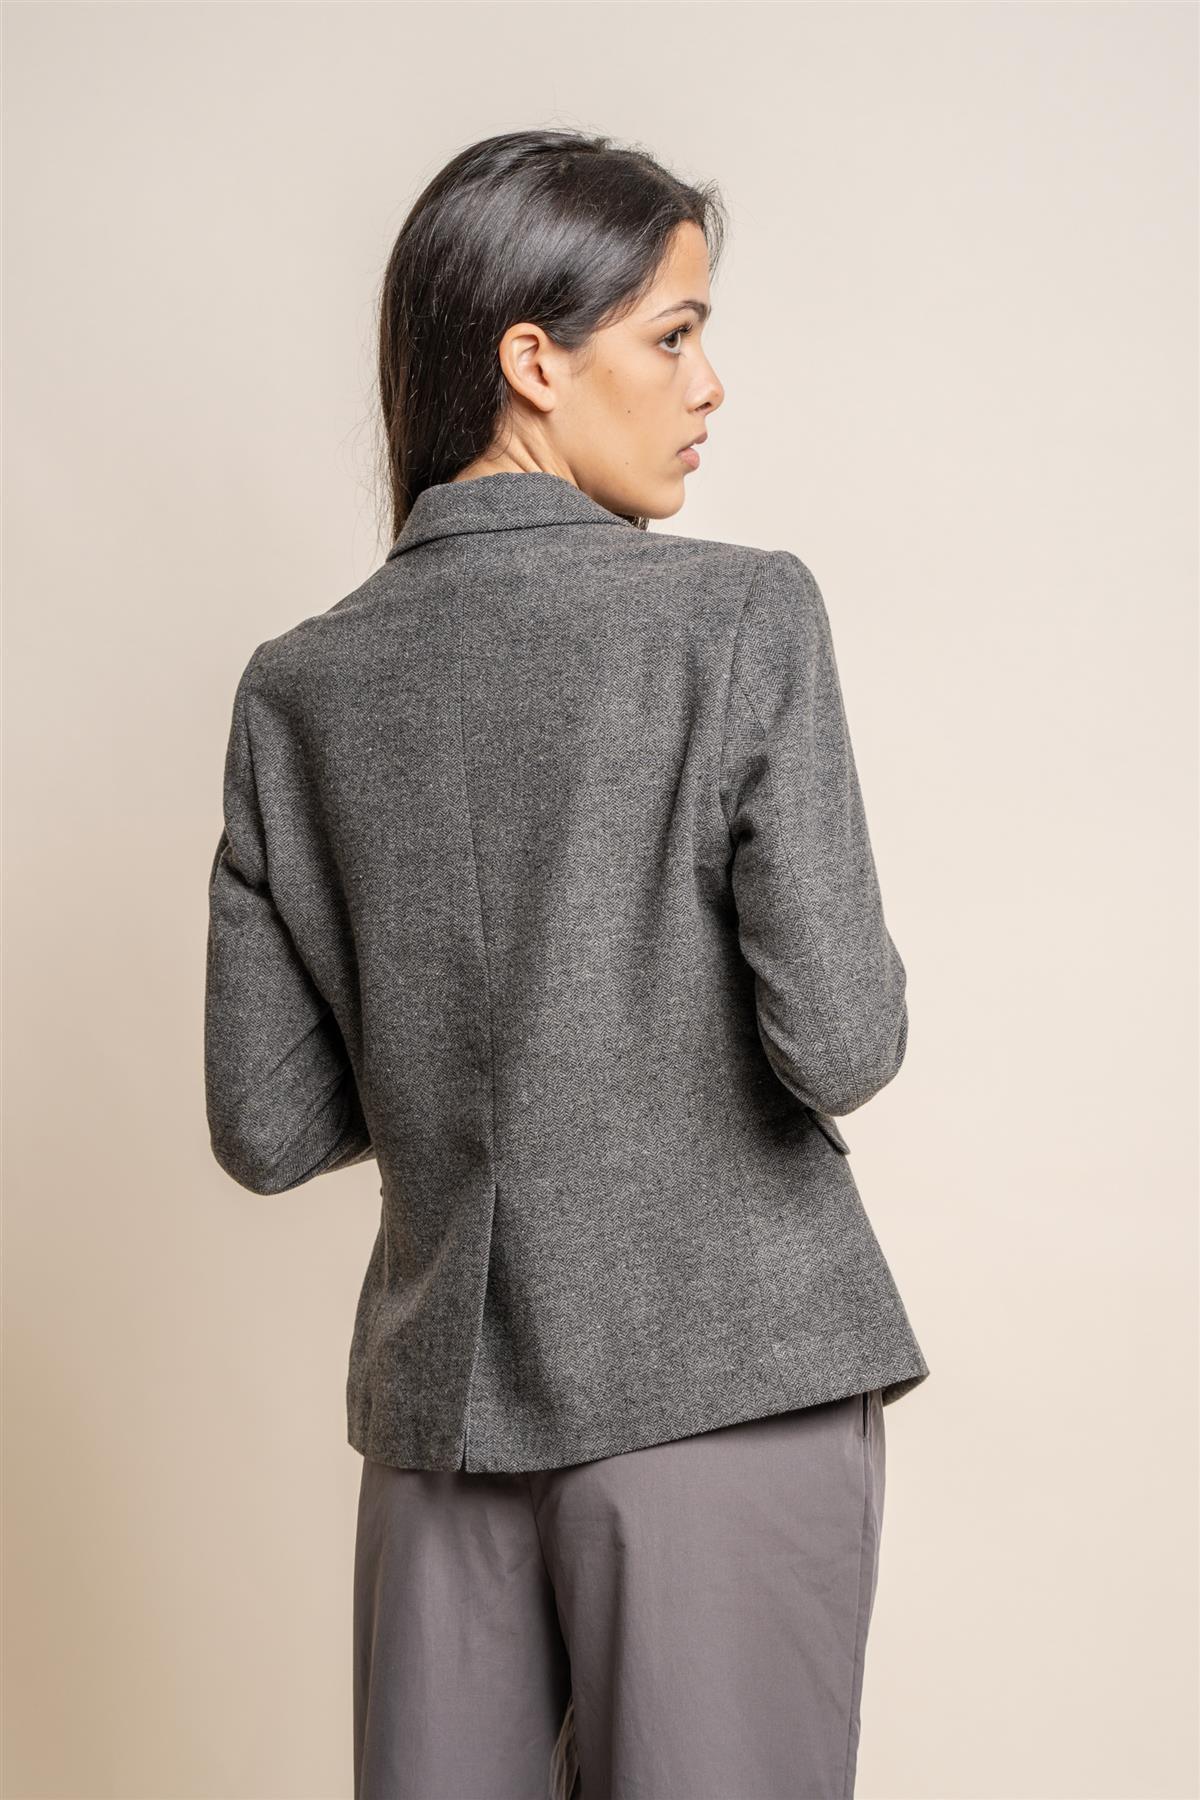 Martez grey ladies tweed blazer back